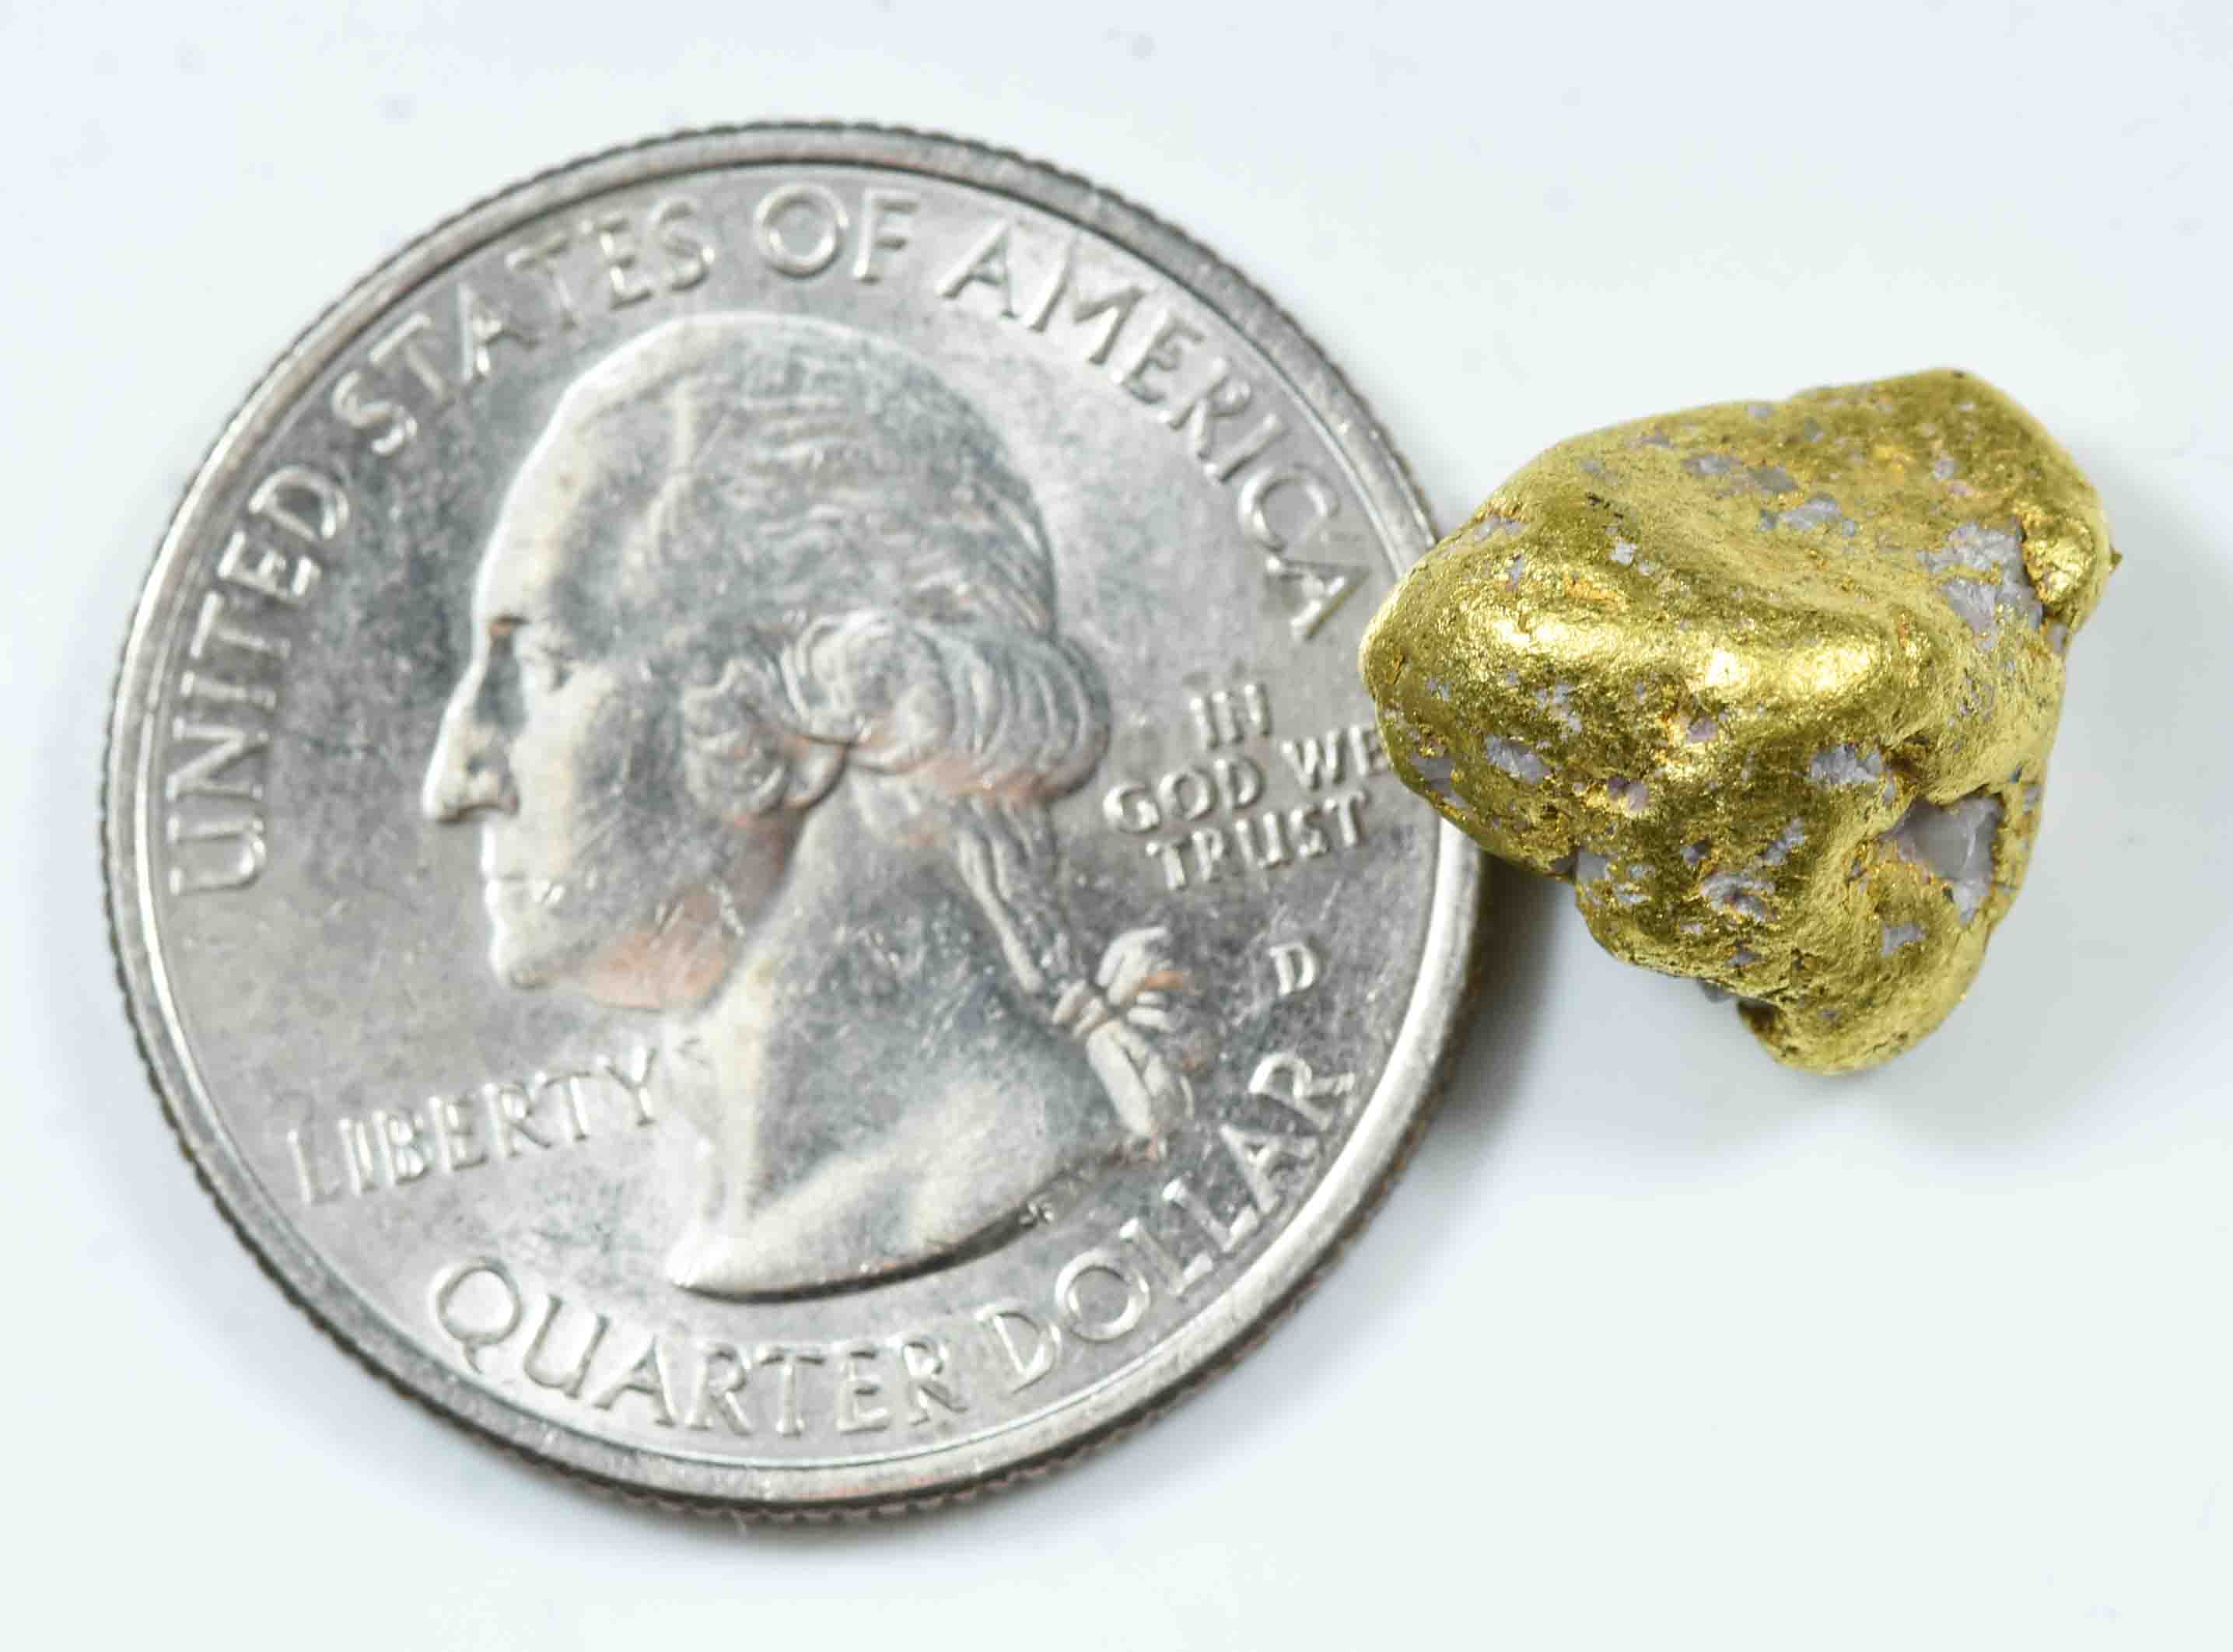 QN-88 "Alaskan BC Gold Nuggets with Quartz" Genuine 4.24 Grams